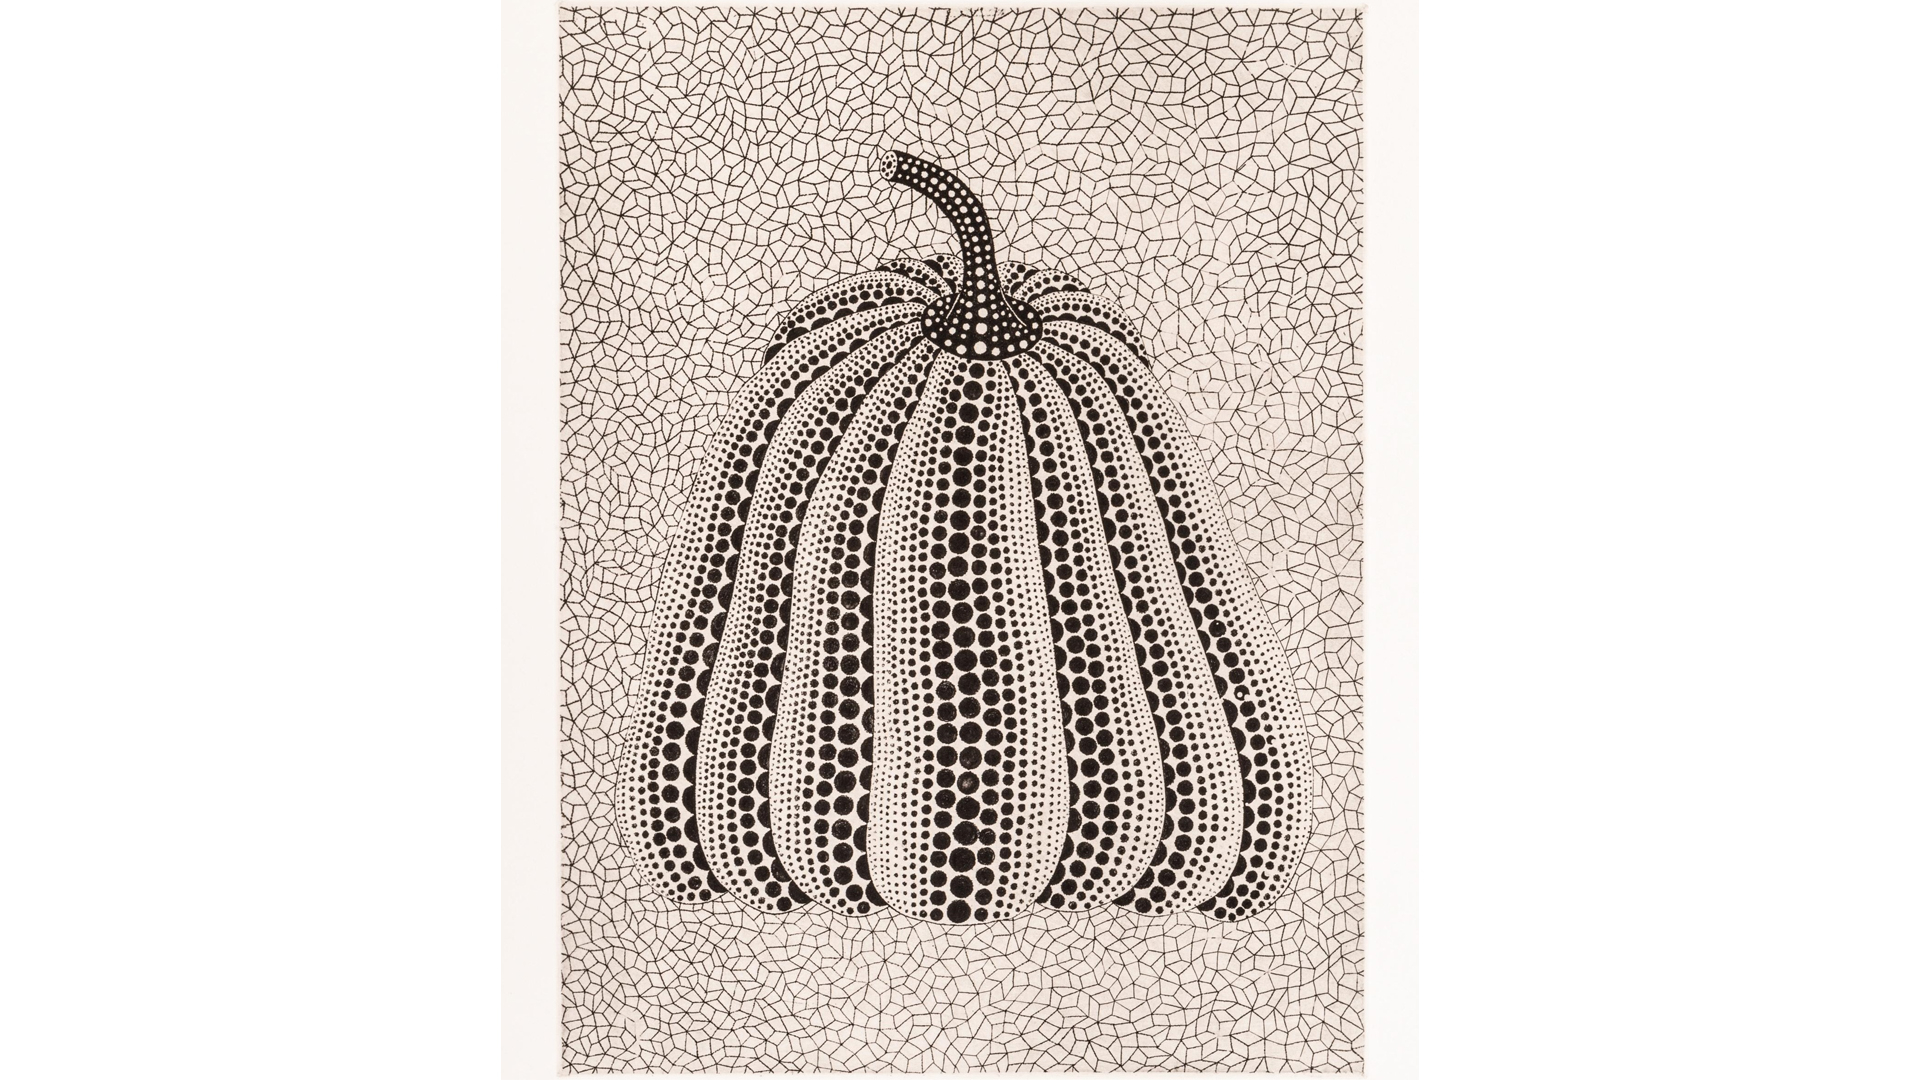 Yayoi Kusama's most outstanding sculptures – Pumpkins & Flowers